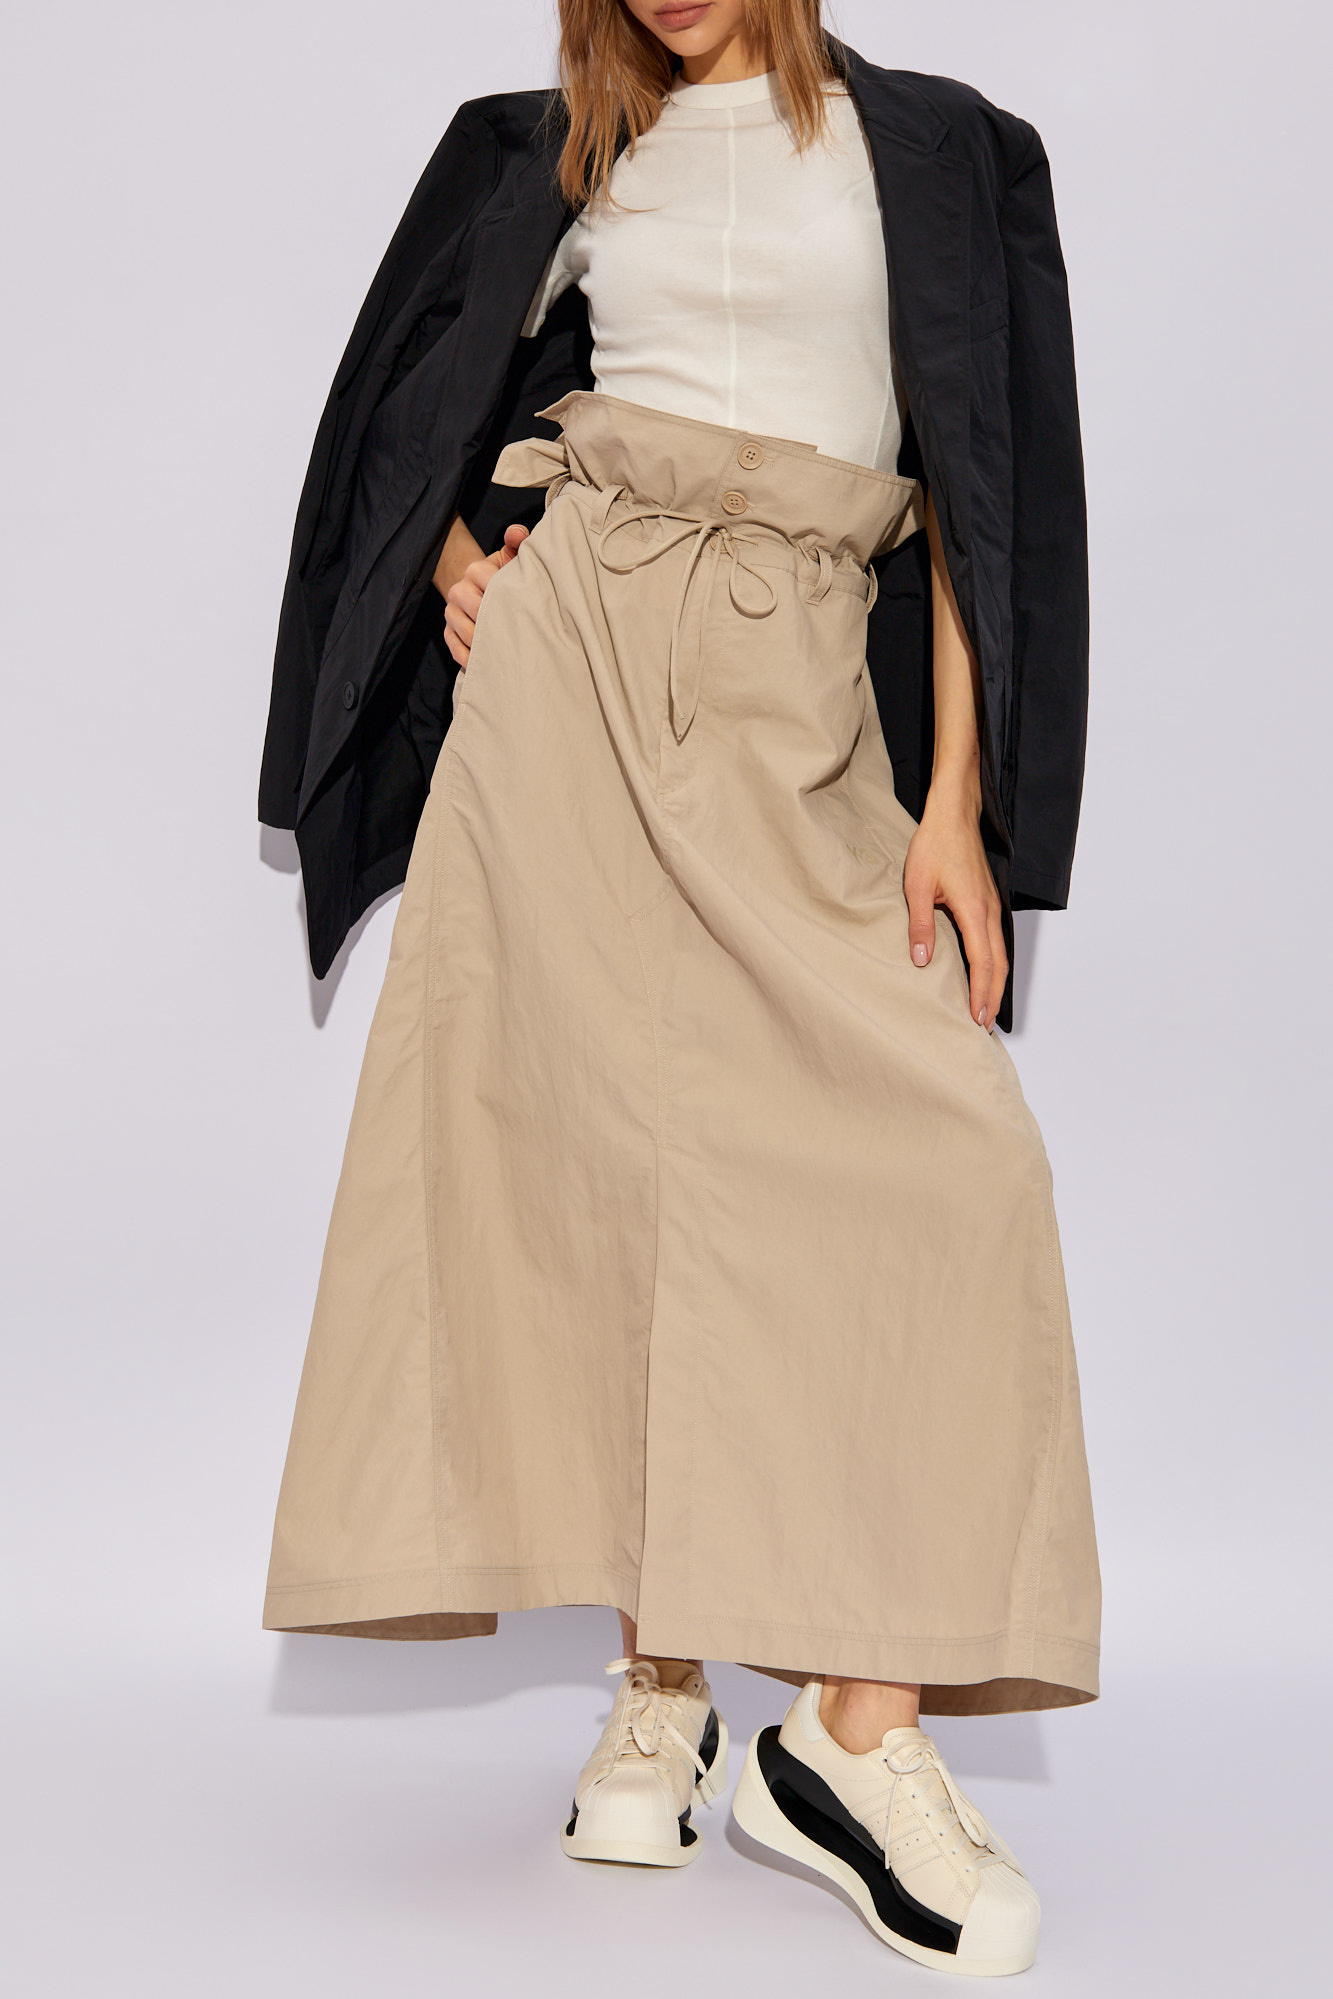 Y-3 Yohji Yamamoto High-waisted skirt